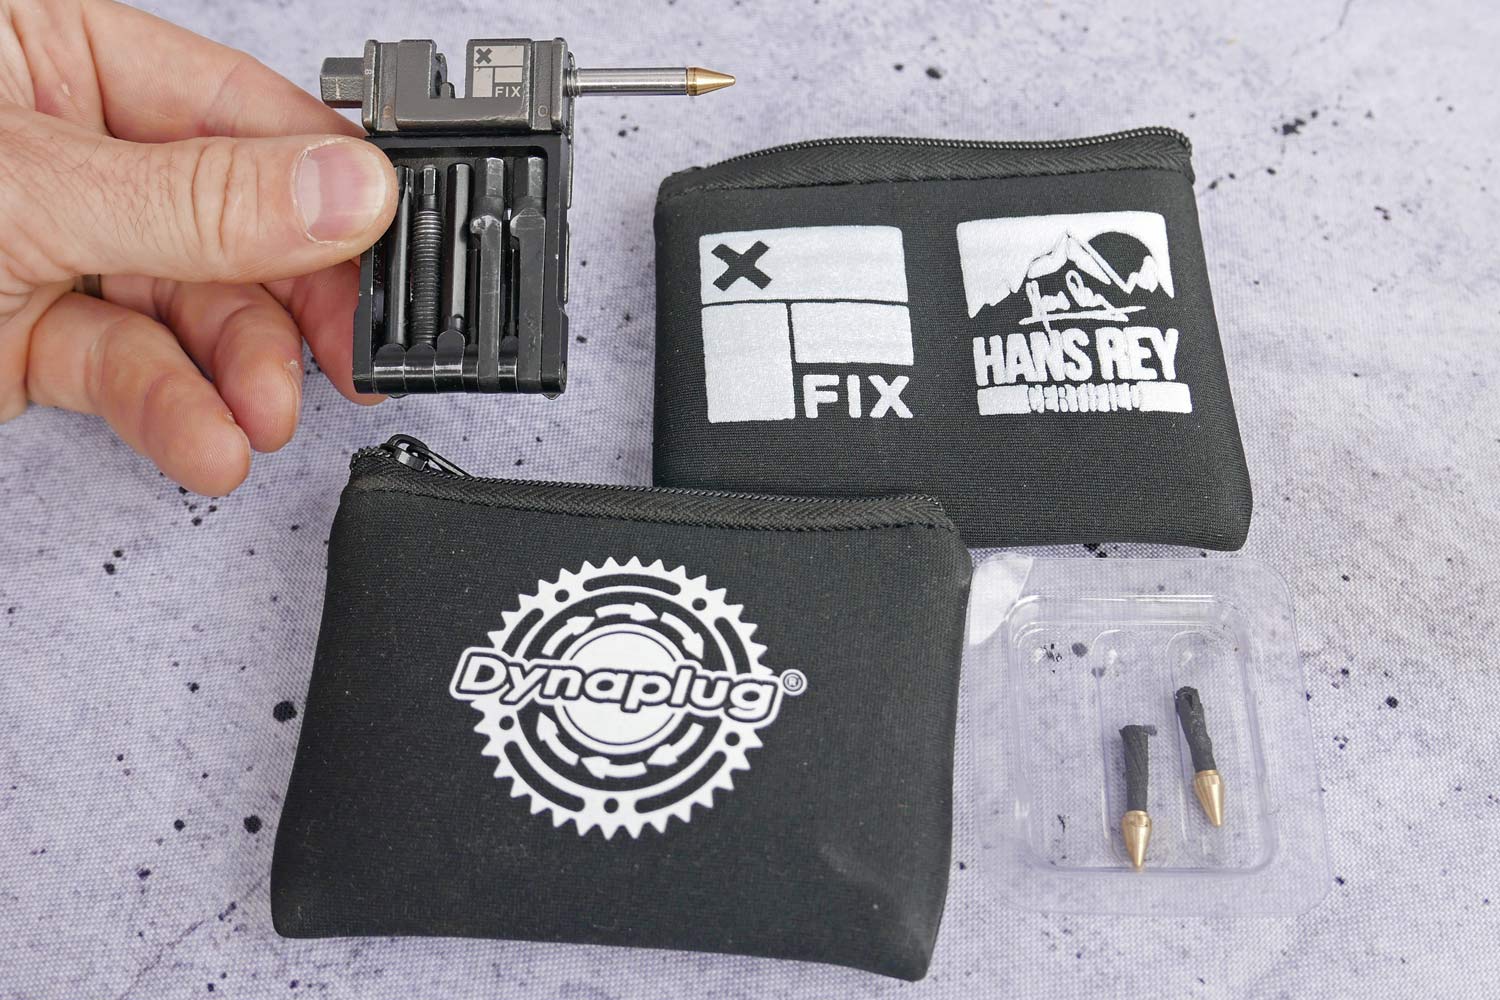 Fix Mfg Wheelie Wrench Pro Hans Rey Dynaplug edition, Fix Manufacturing tools, modular mini multi-tool with chain-breaker & tubeless tire plug